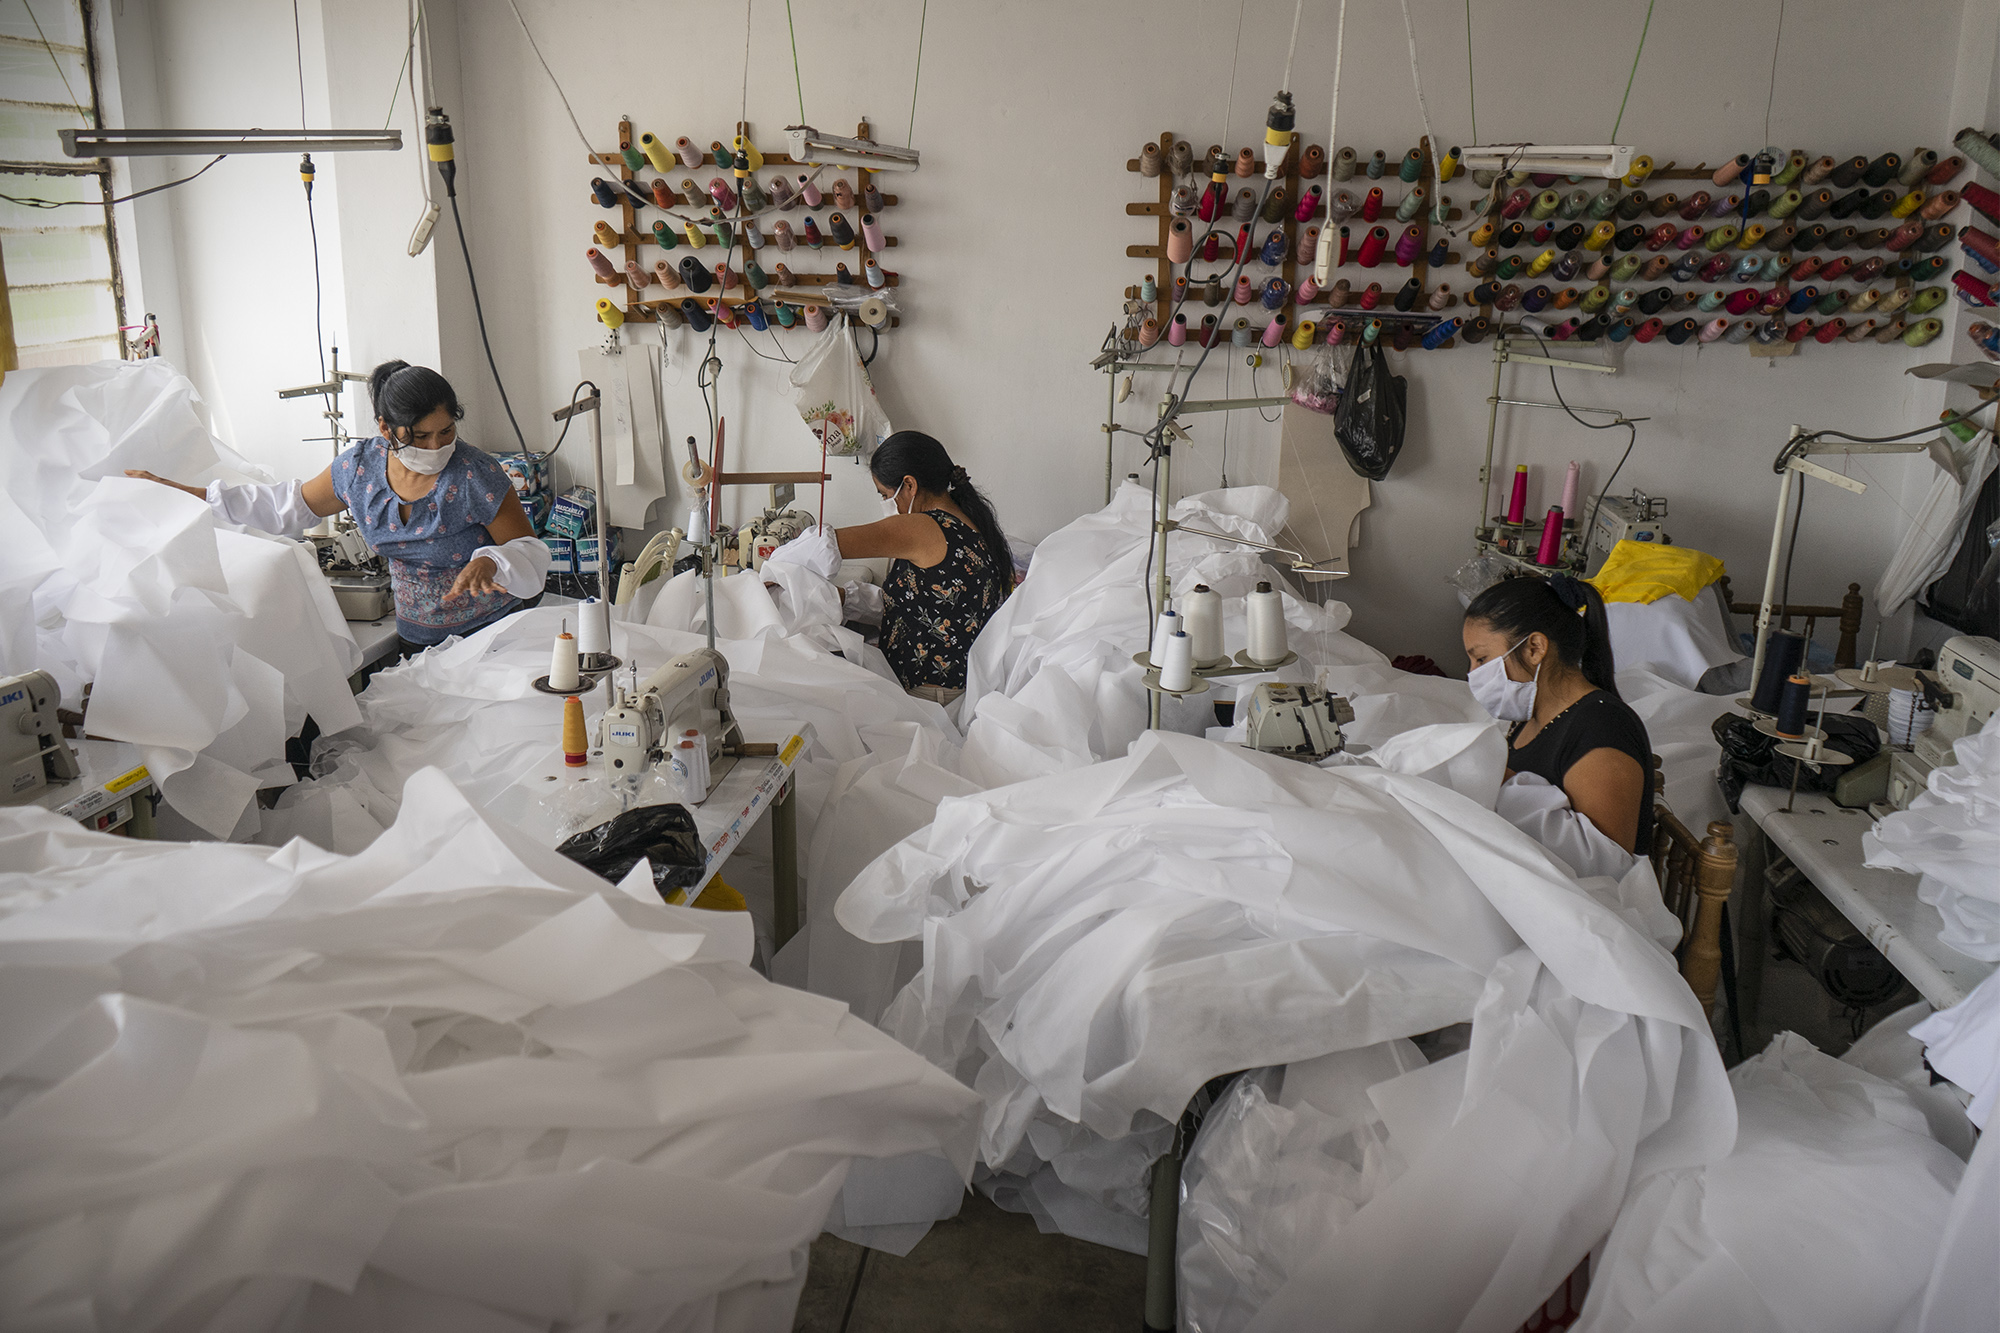 textile workers in a workshop in peru